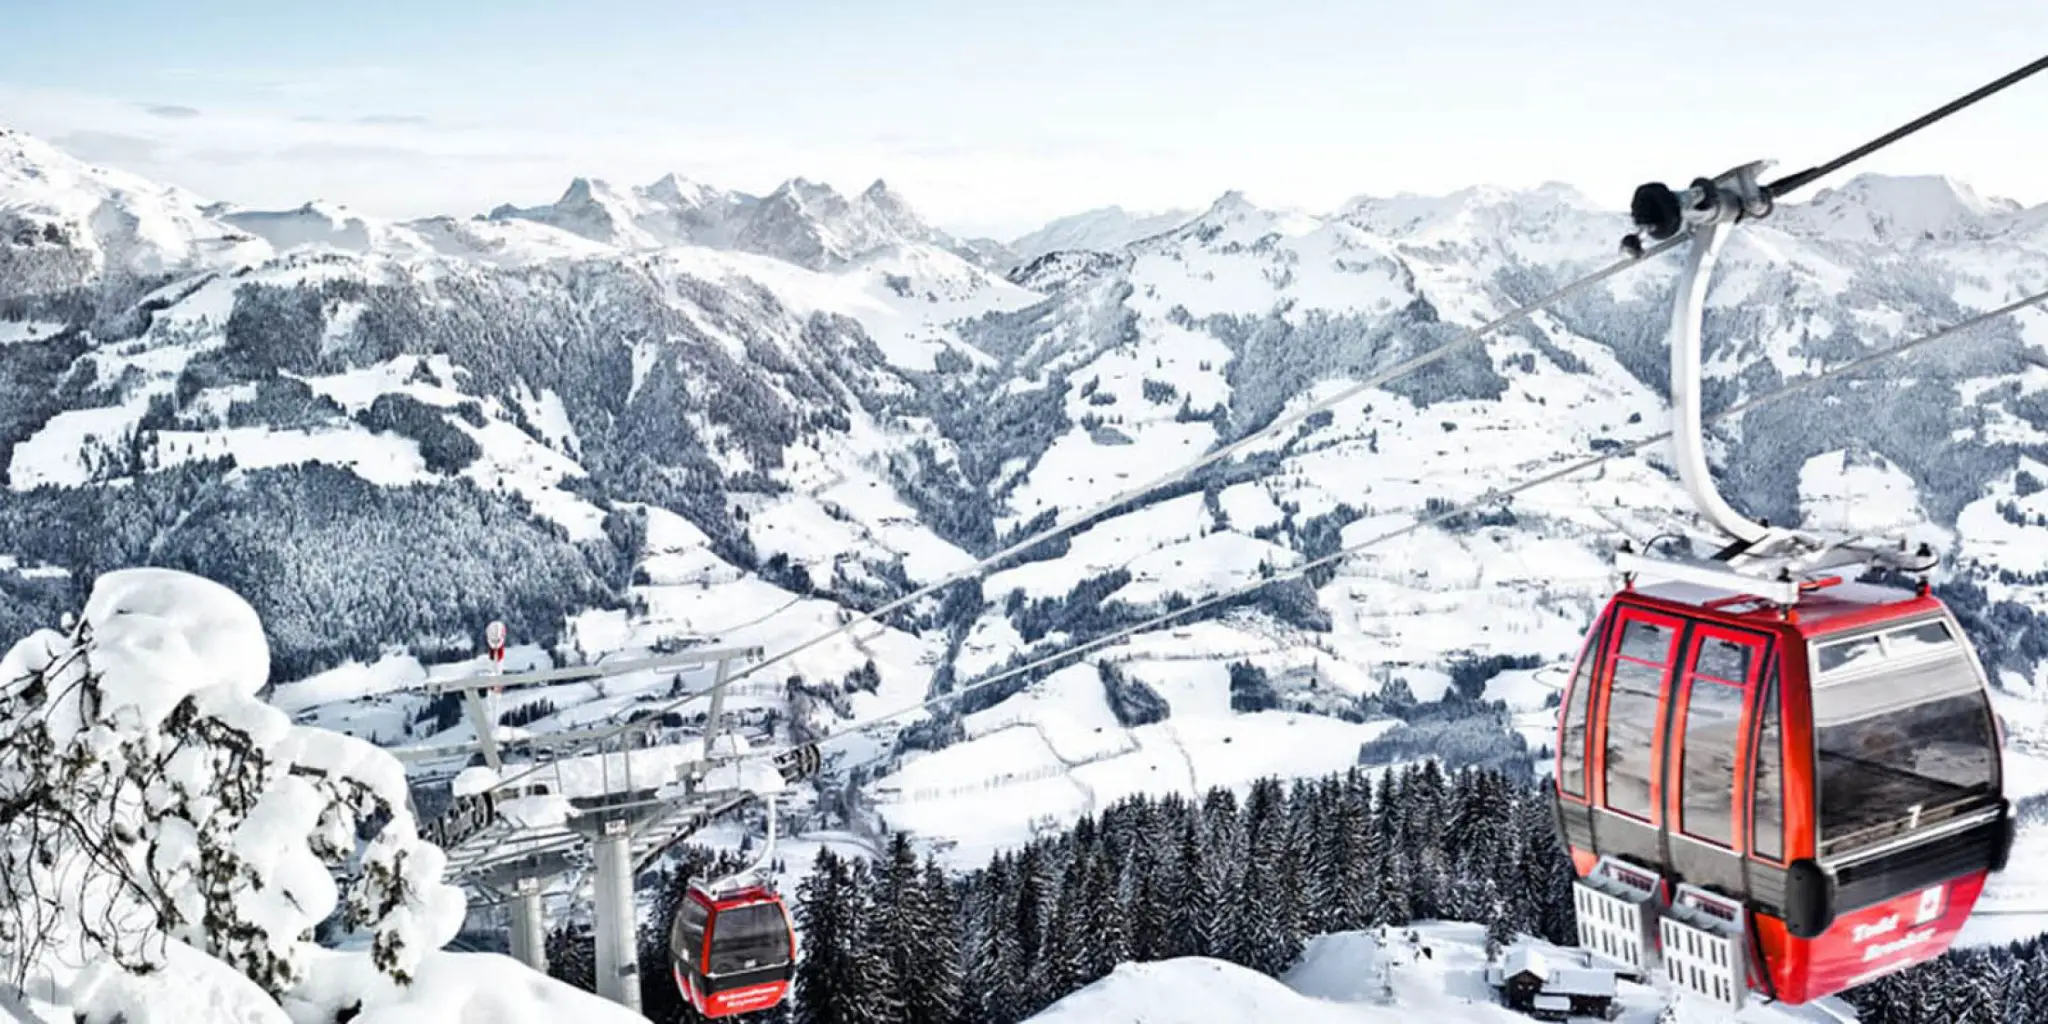 7 statiuni de schi in Europa. Unde e cea mai buna zapada in 2019